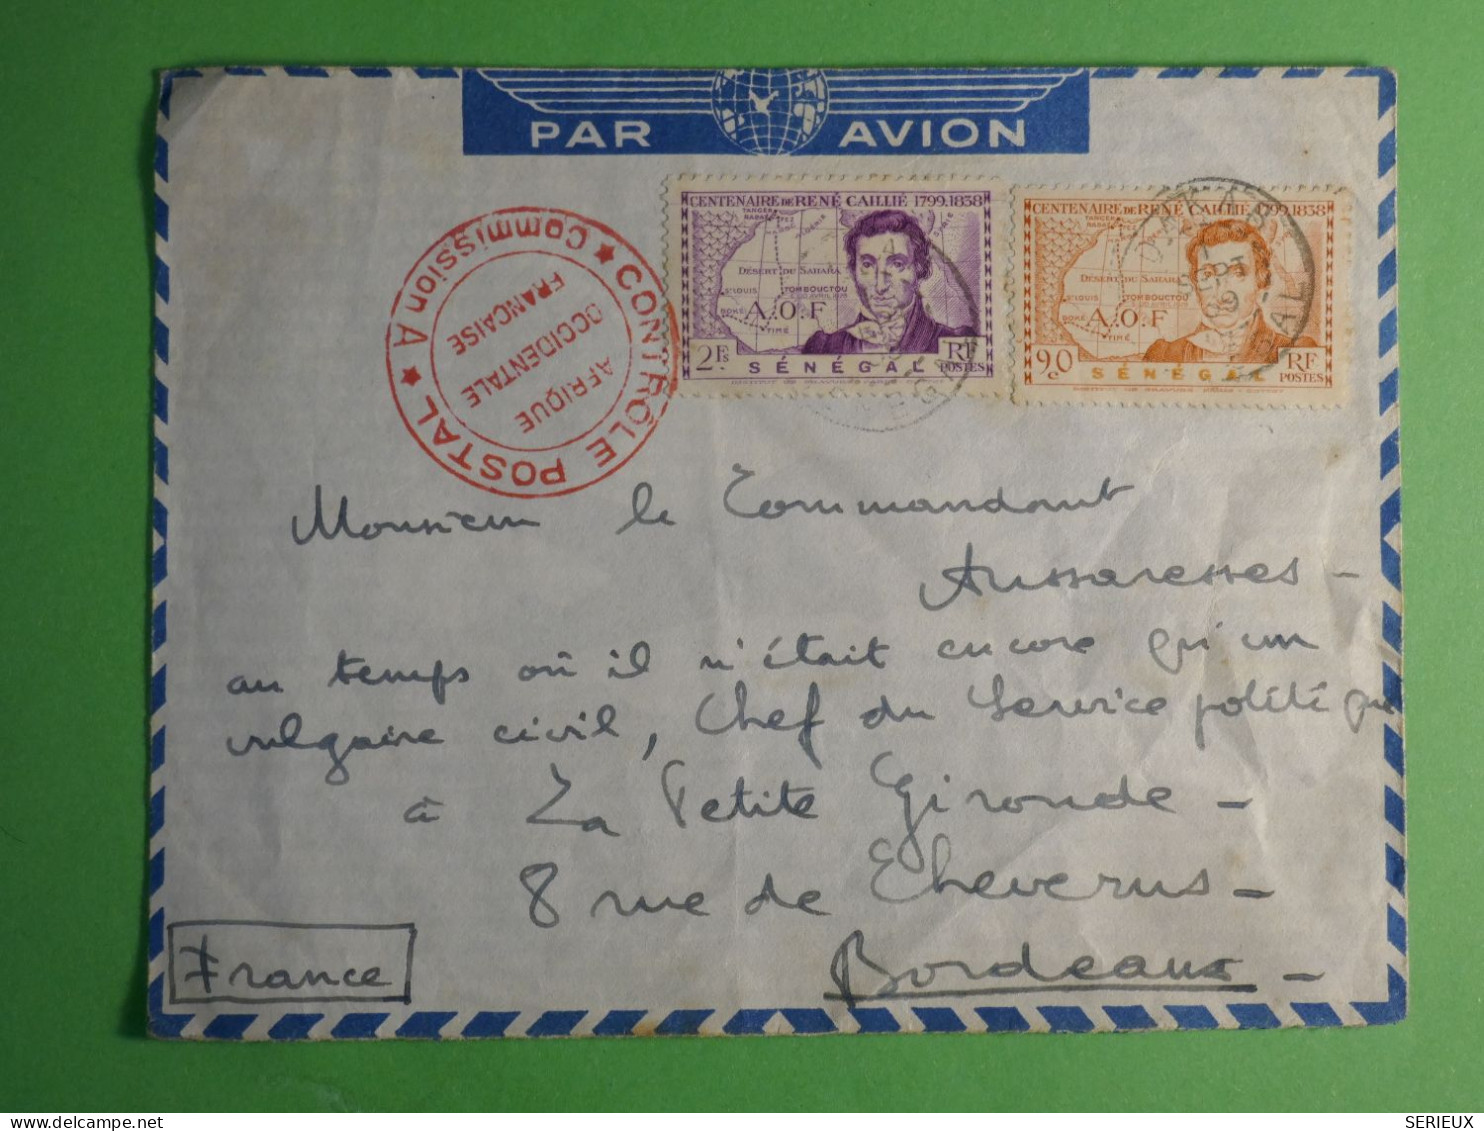 DN20 SENEGAL AOF   LETTRE  CENSUREE 1939   DAKAR  A  BORDEAUX FRANCE ++ AFF.   INTERESSANT+ ++++ - Covers & Documents